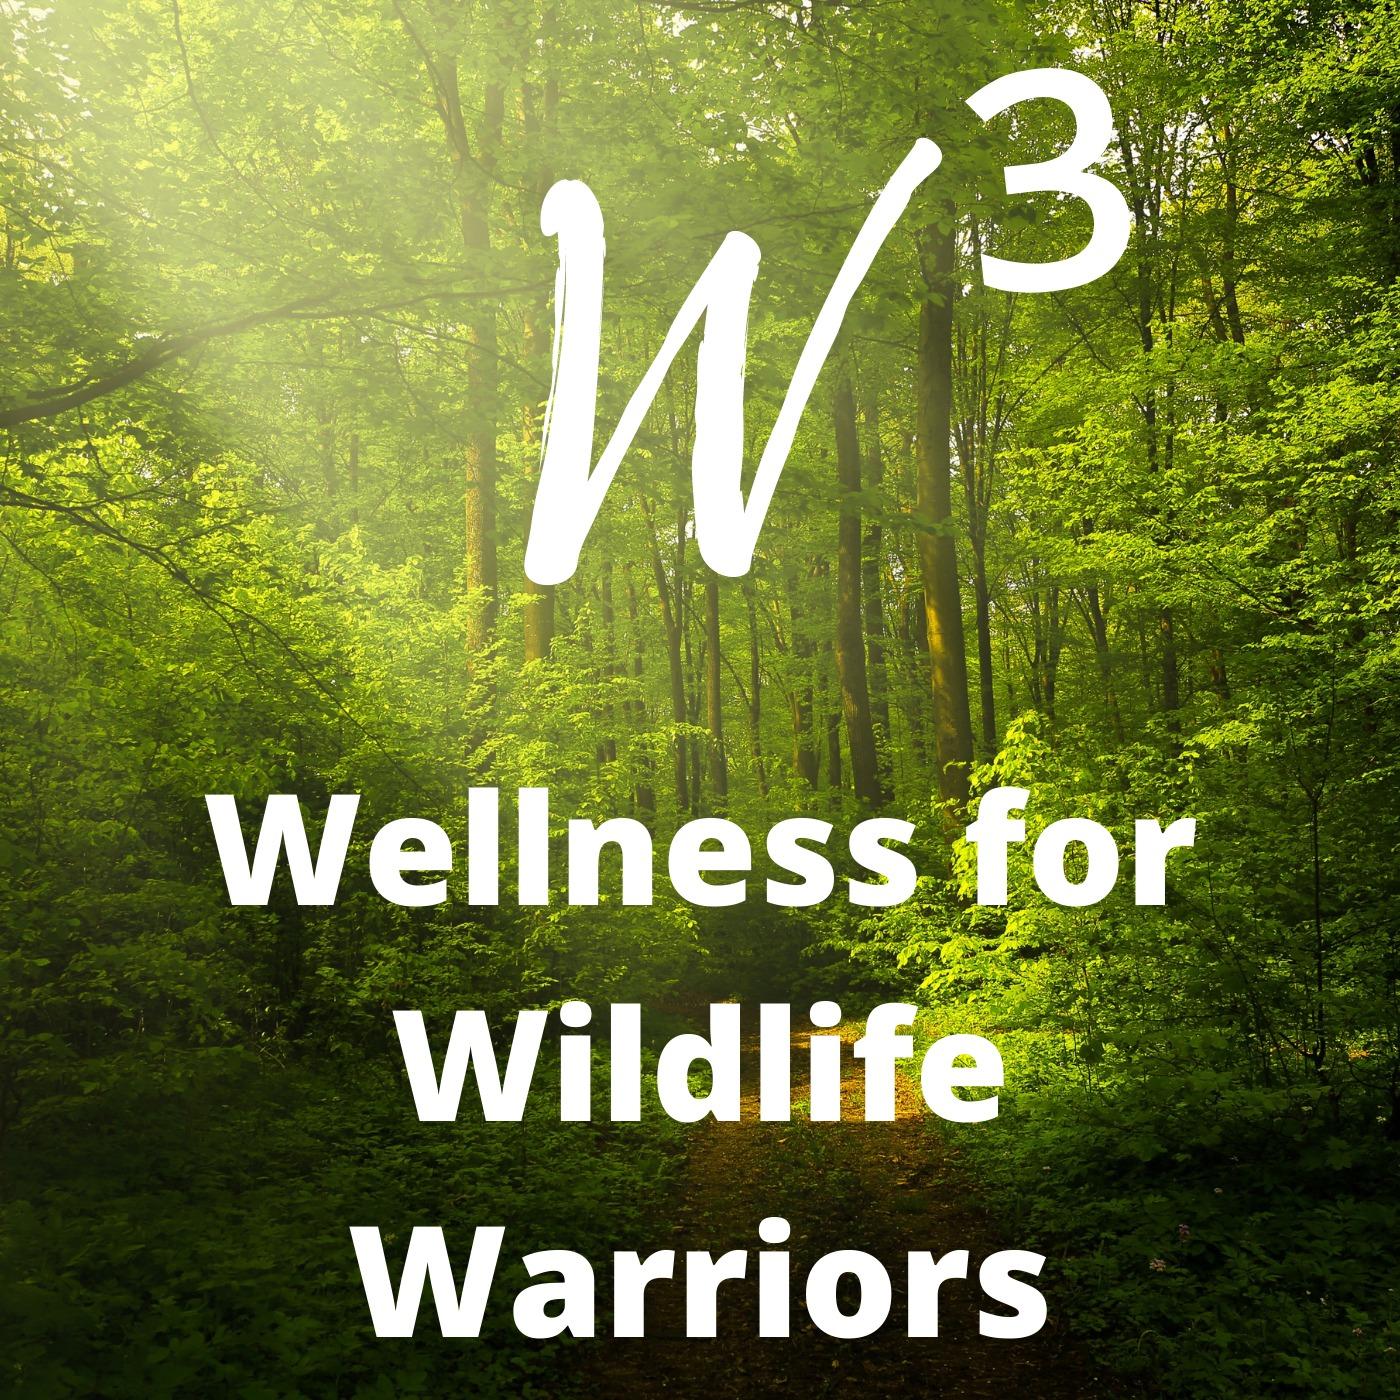 Wellness for Wildlife Warriors